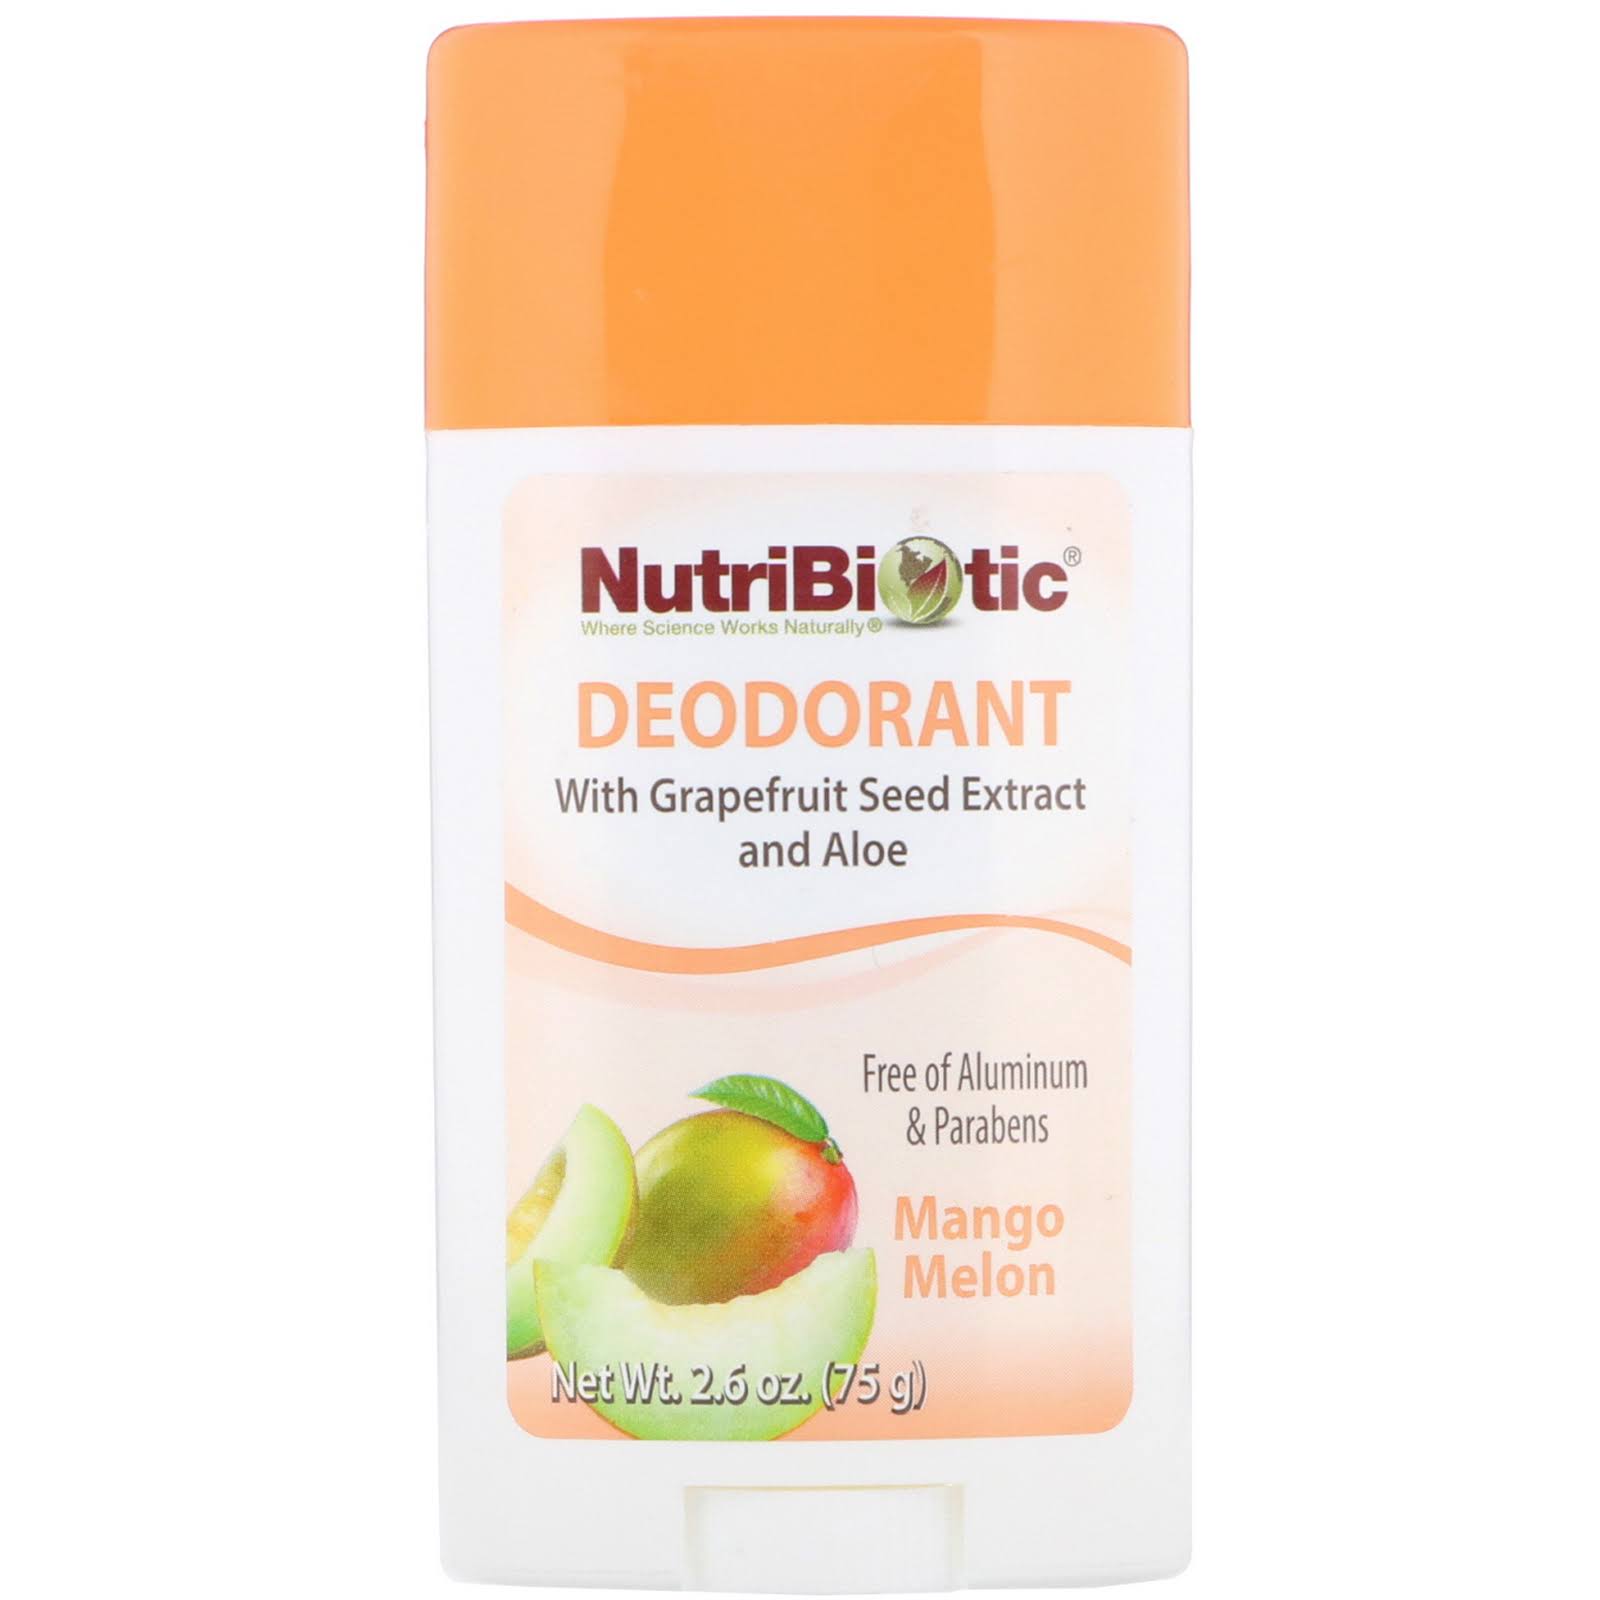 Nutribiotic Deodorant - Mango Melon, 2.6oz